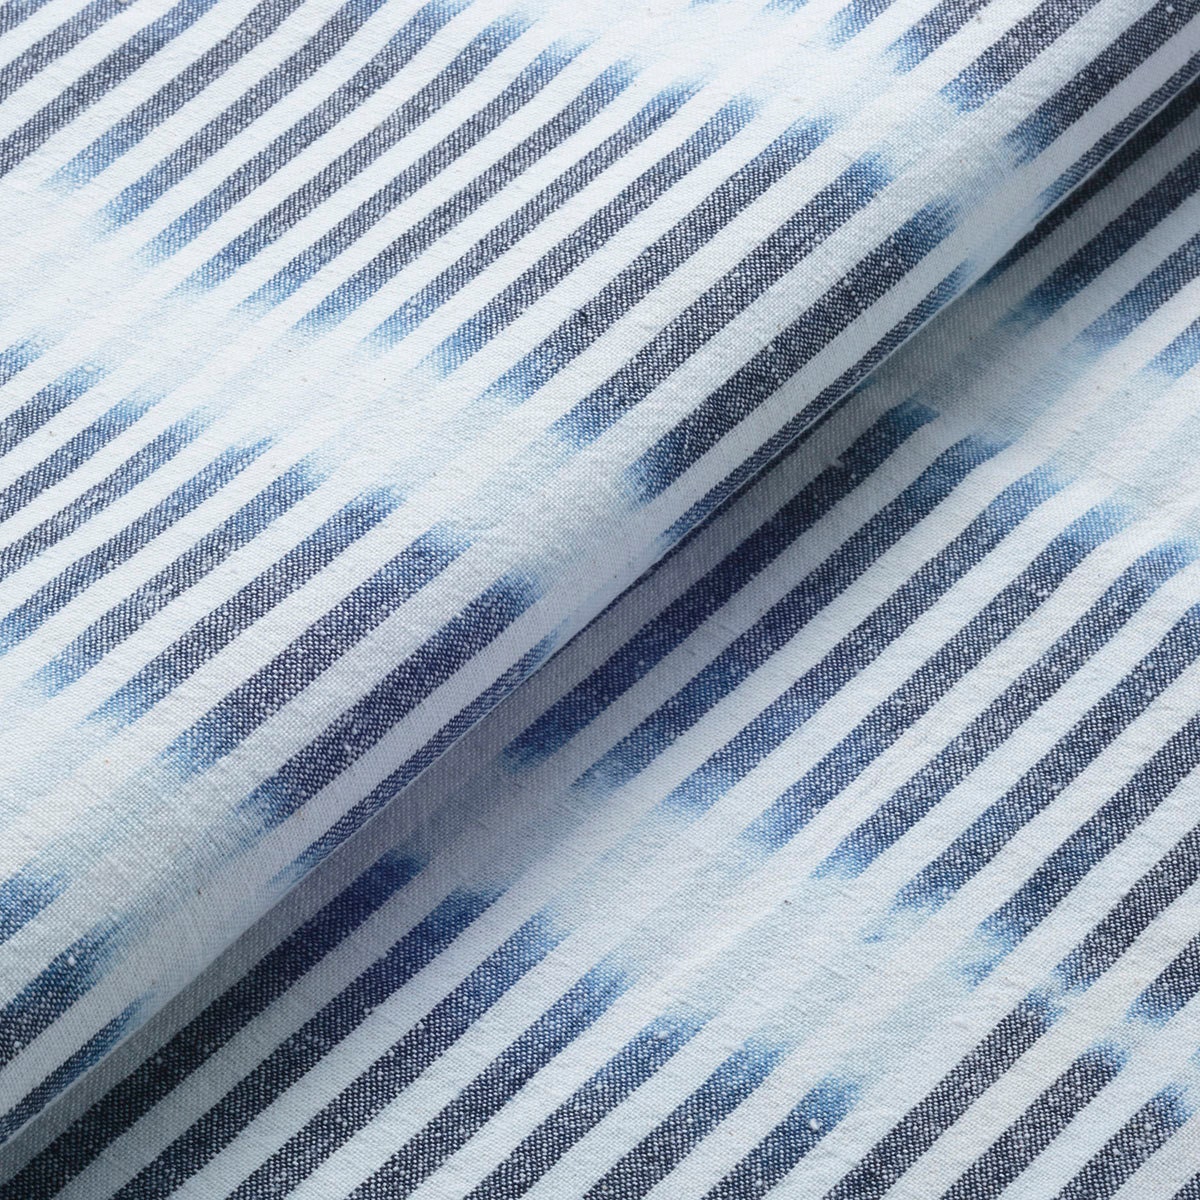 Han-Kasuri spot dye-patterning thin tie-dye | Etsy